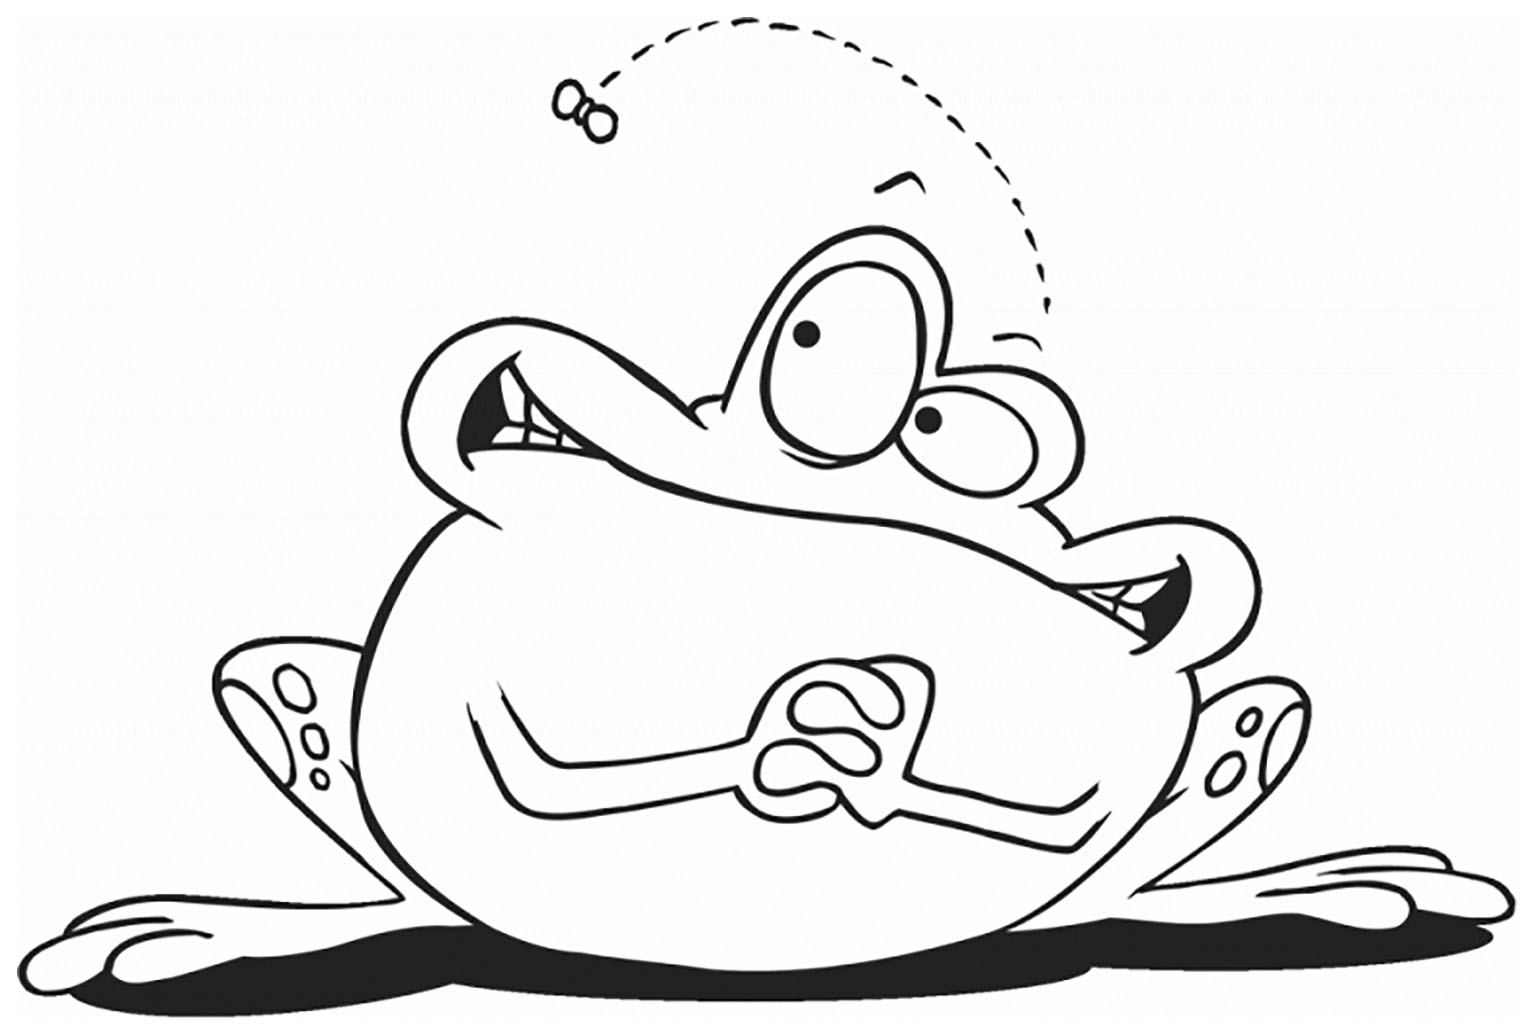 Dibujo de rana para descargar e imprimir para niños